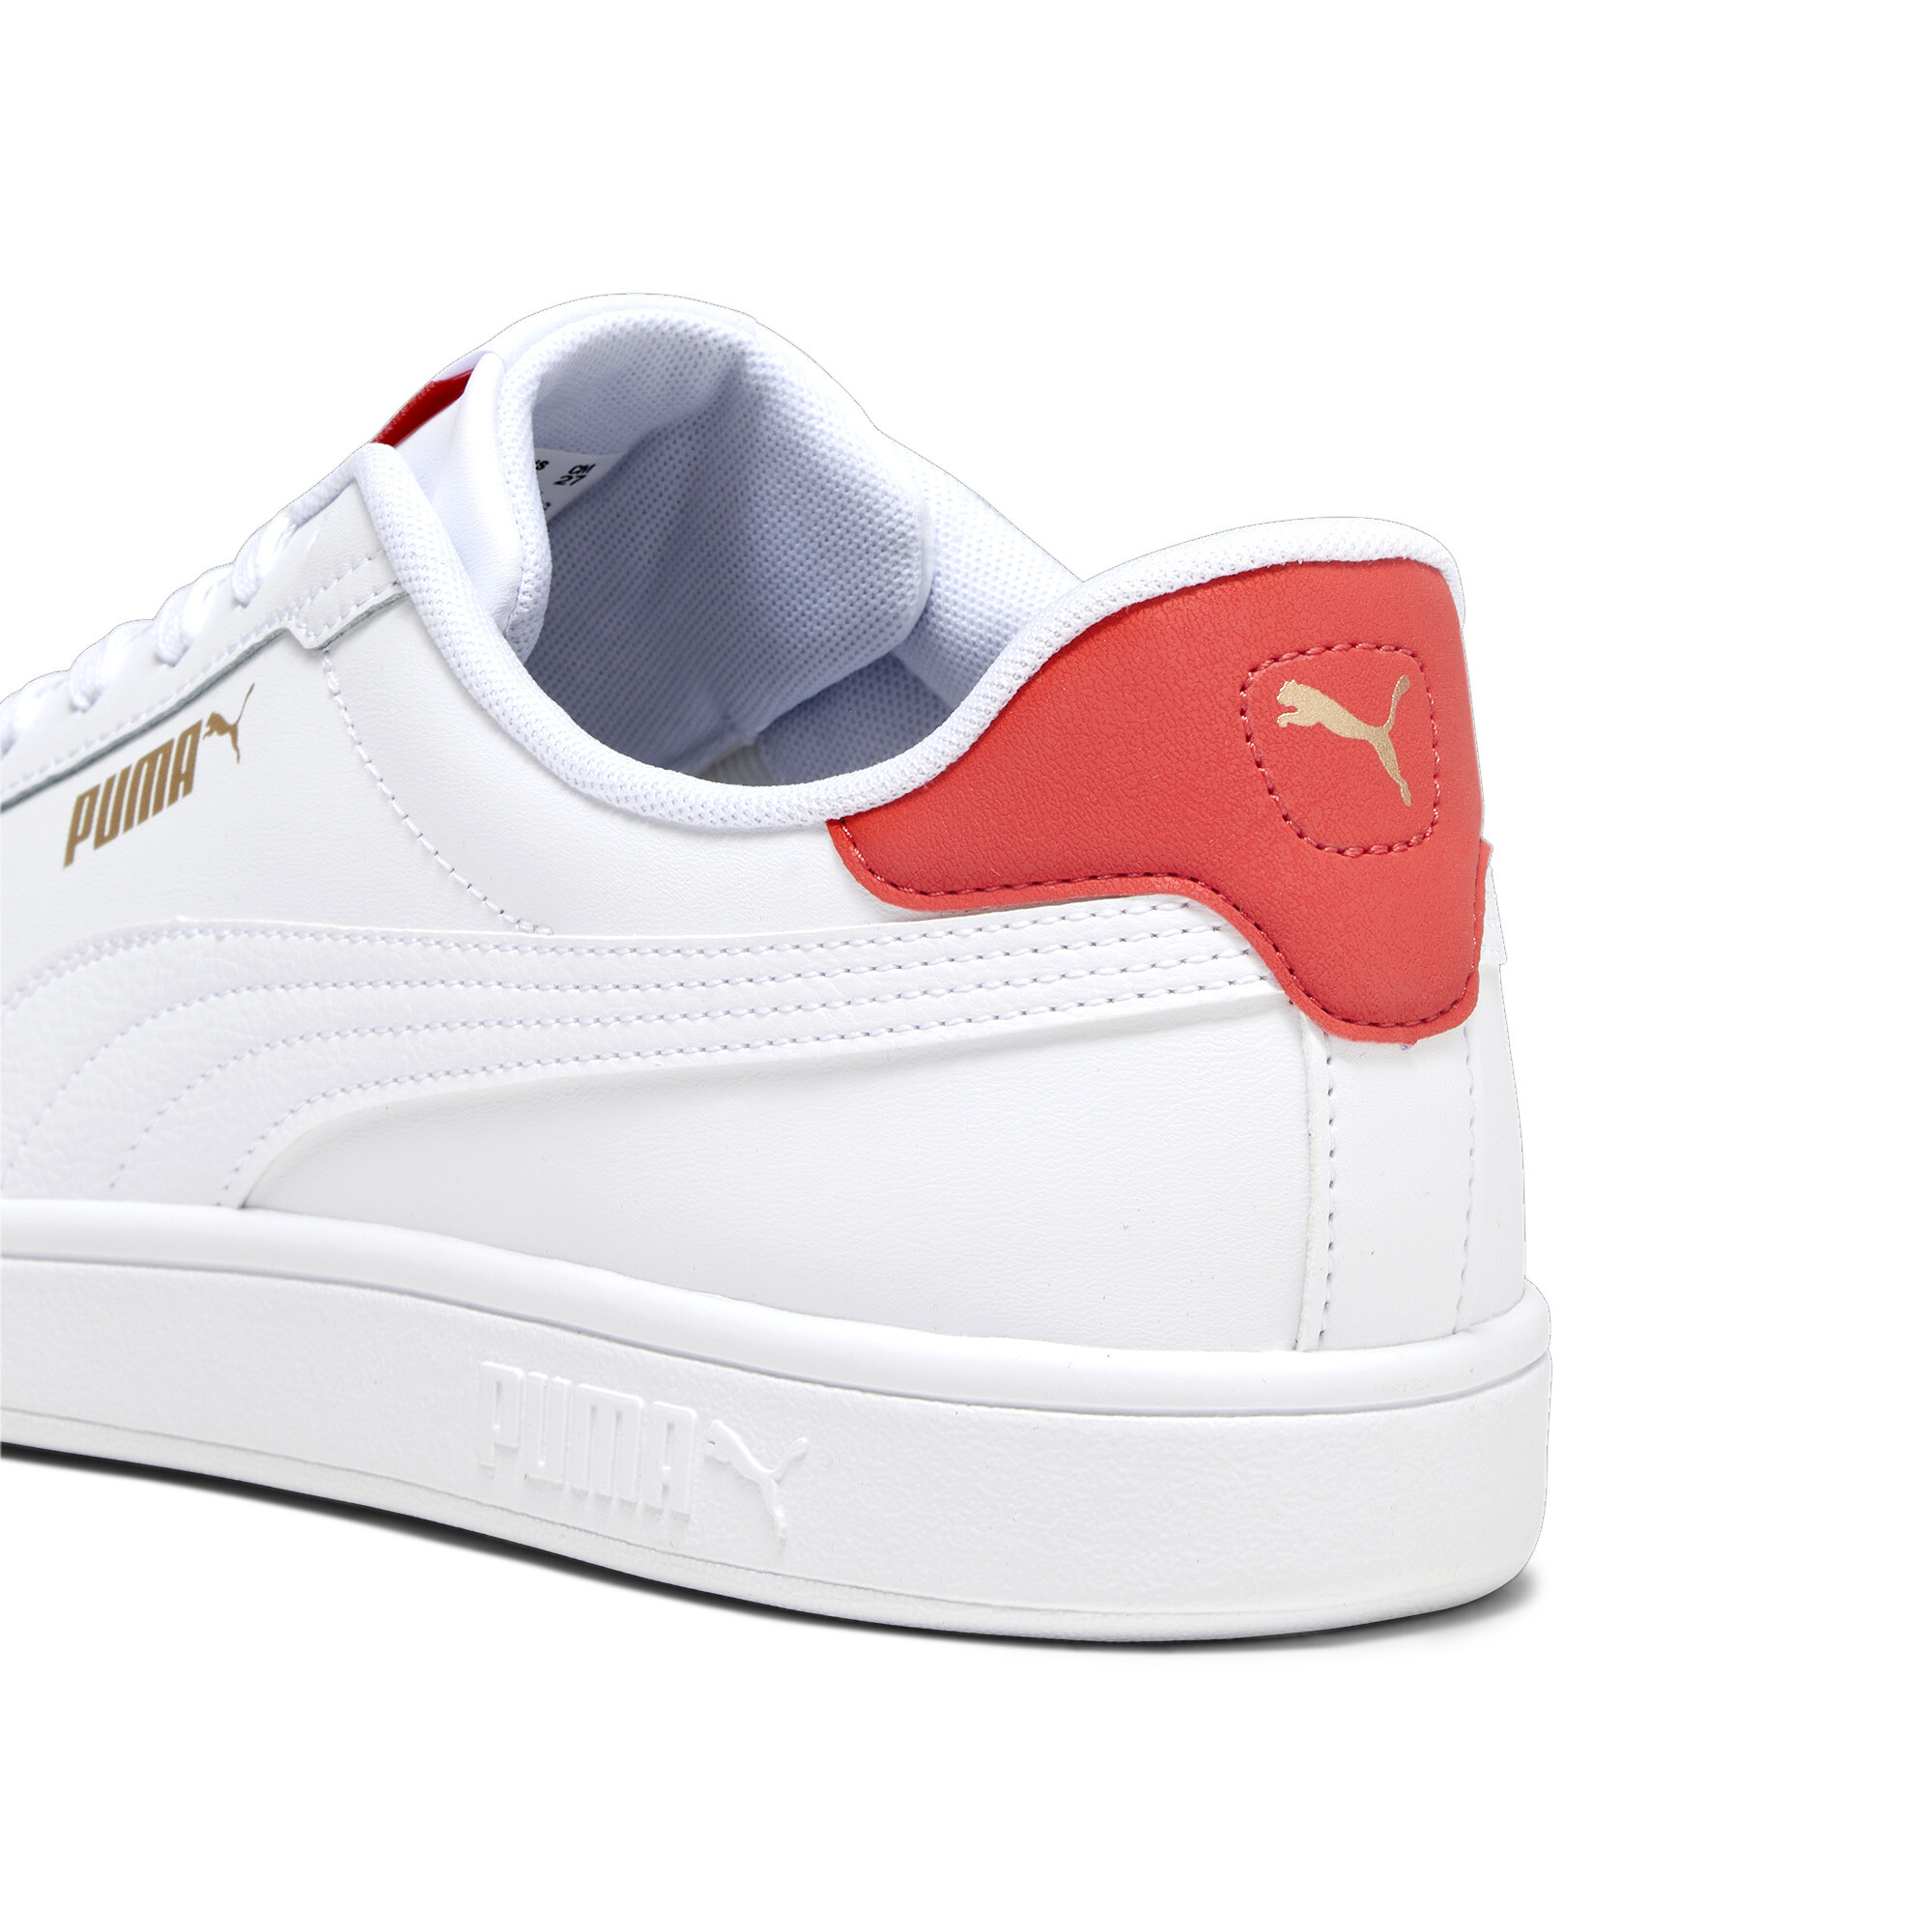 Puma Smash 3.0 L Sneakers, White, Size 36, Shoes